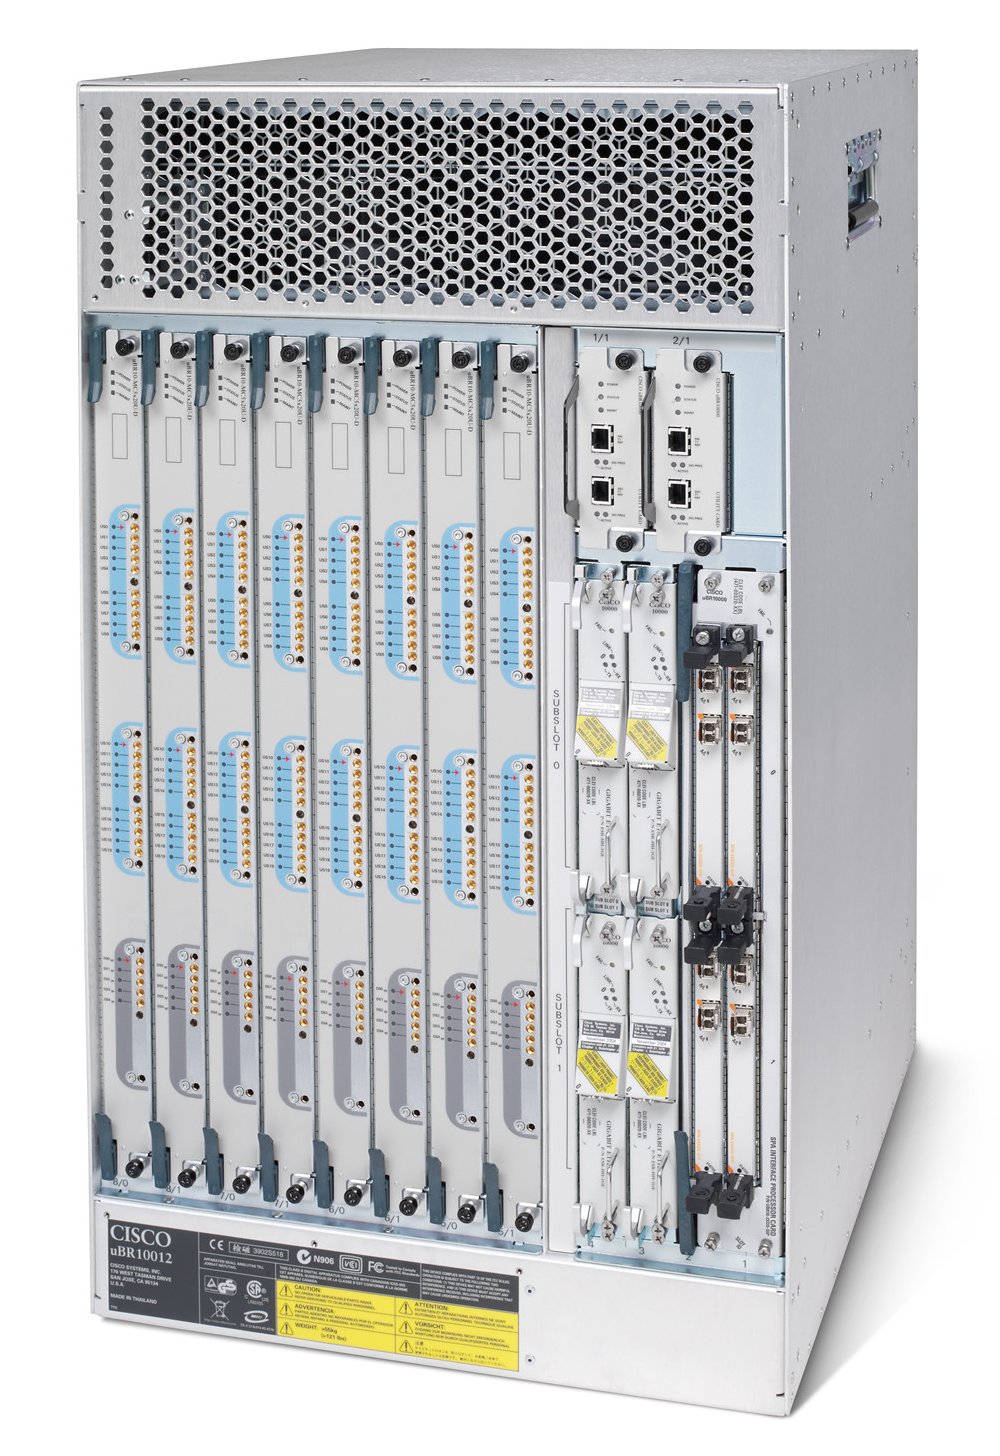 Product image of Cisco uBR10012 Universal Broadband Router